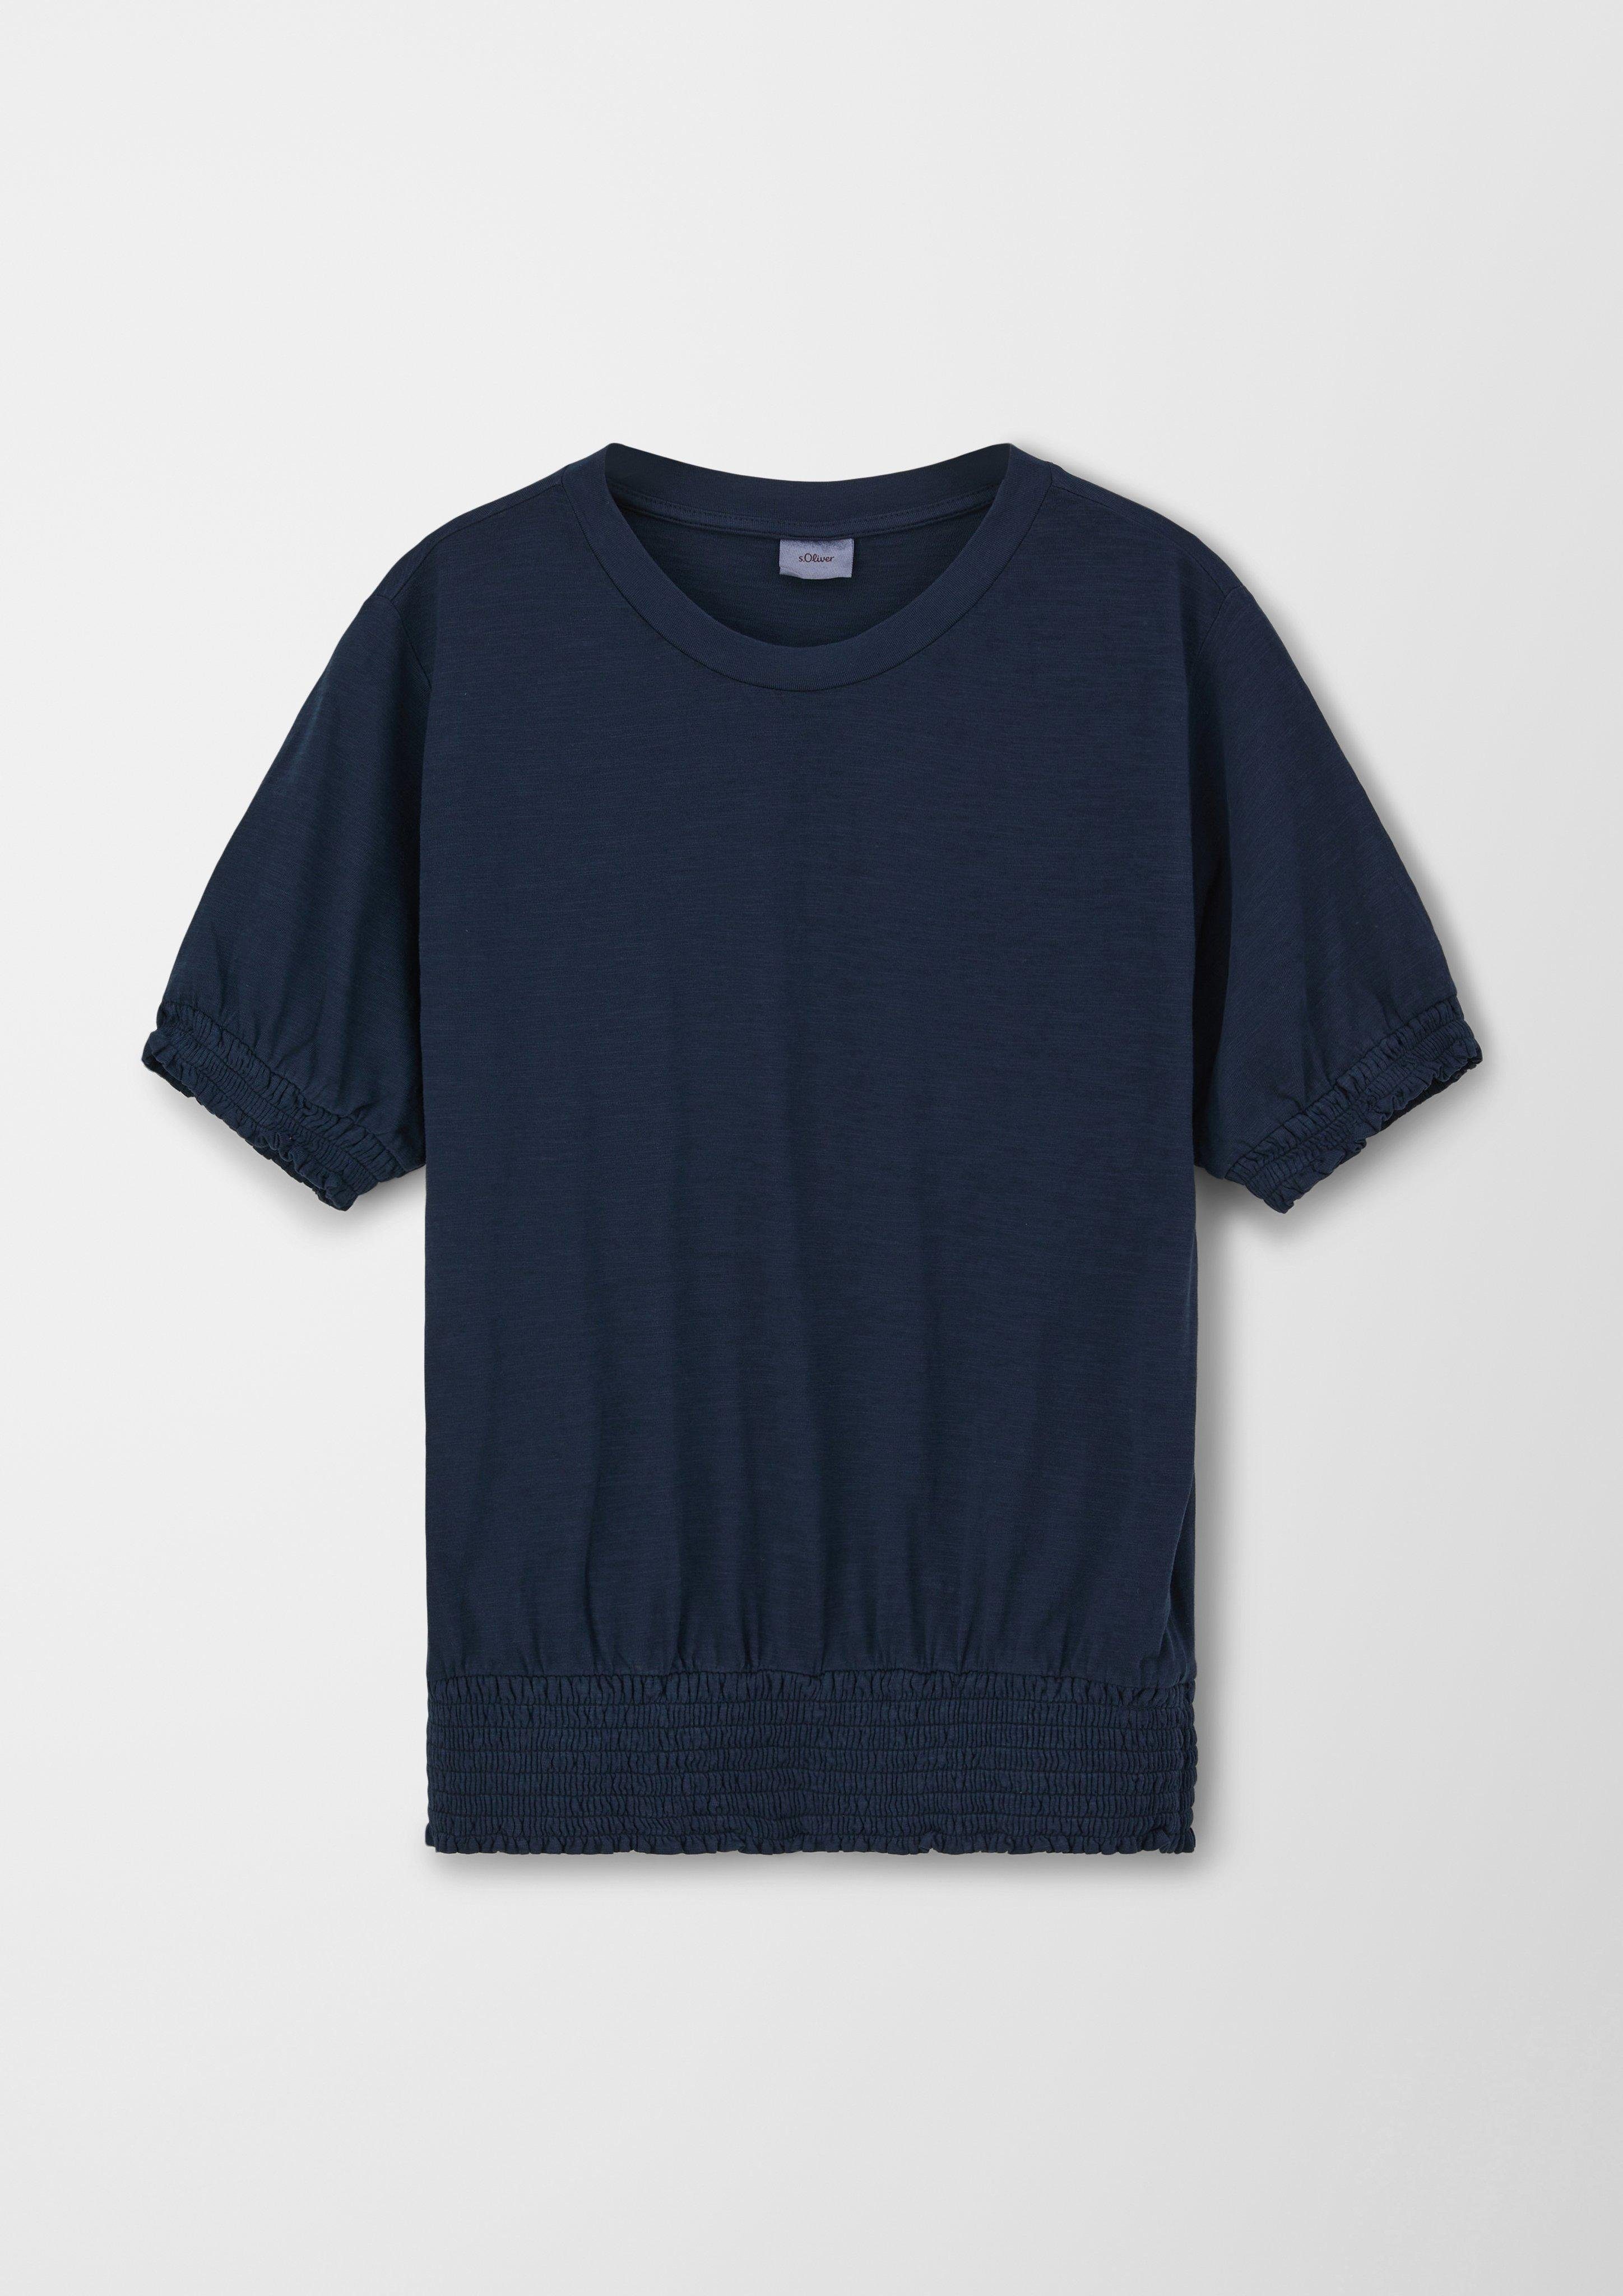 s.Oliver Kurzarmshirt T-Shirt mit Smok-Partien Garment Dye, Smok-Detail navy